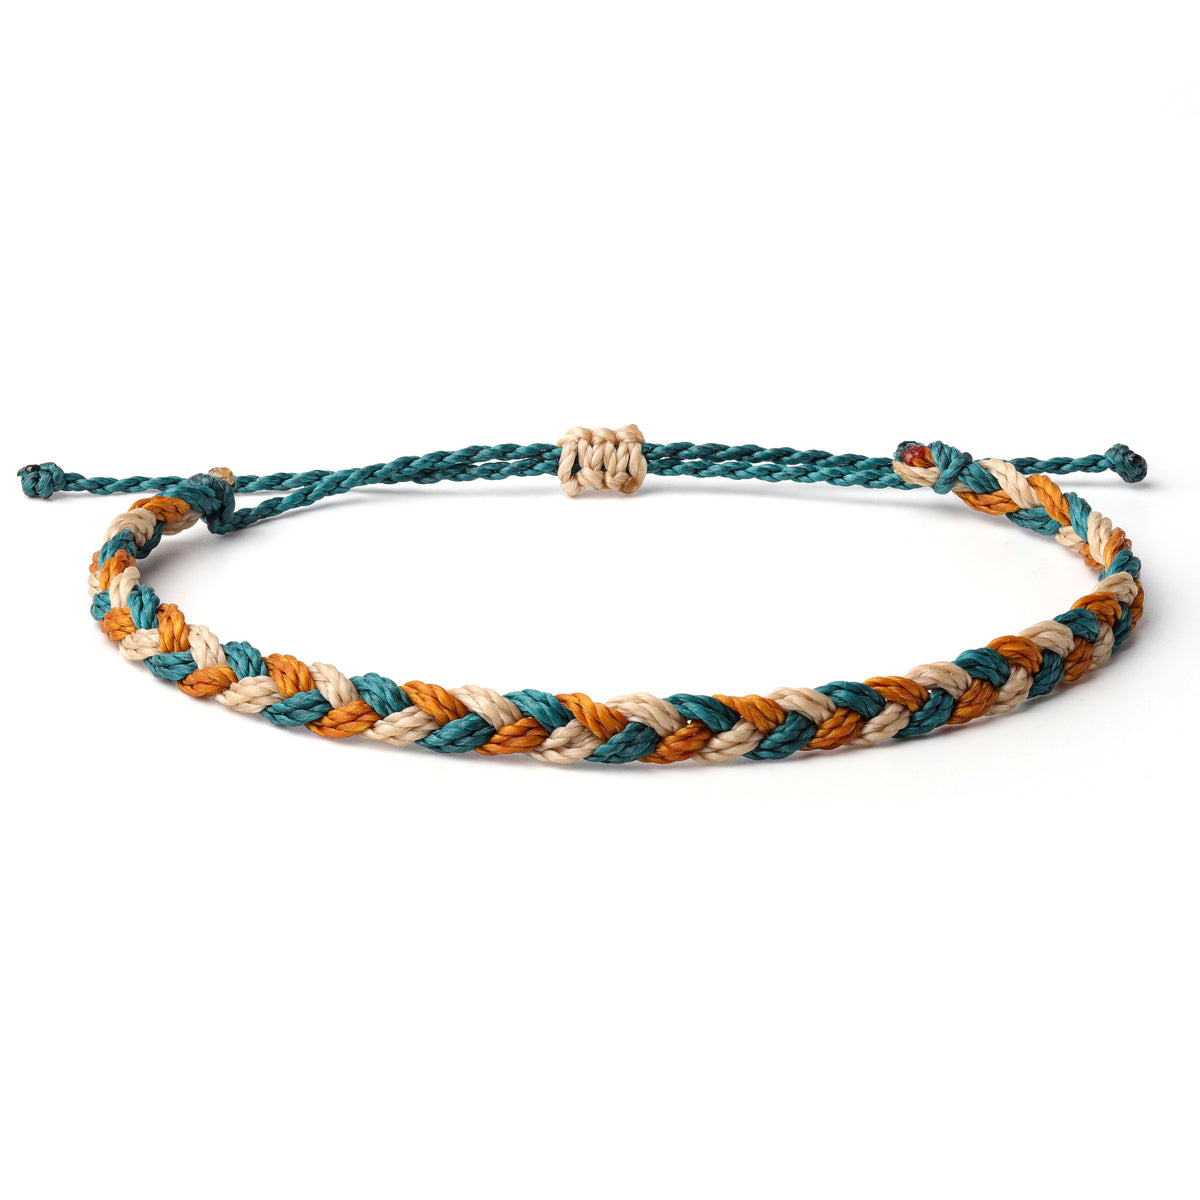 Braided Waterproof Bracelet with wax coated thread and colors teal blue, beige, orange